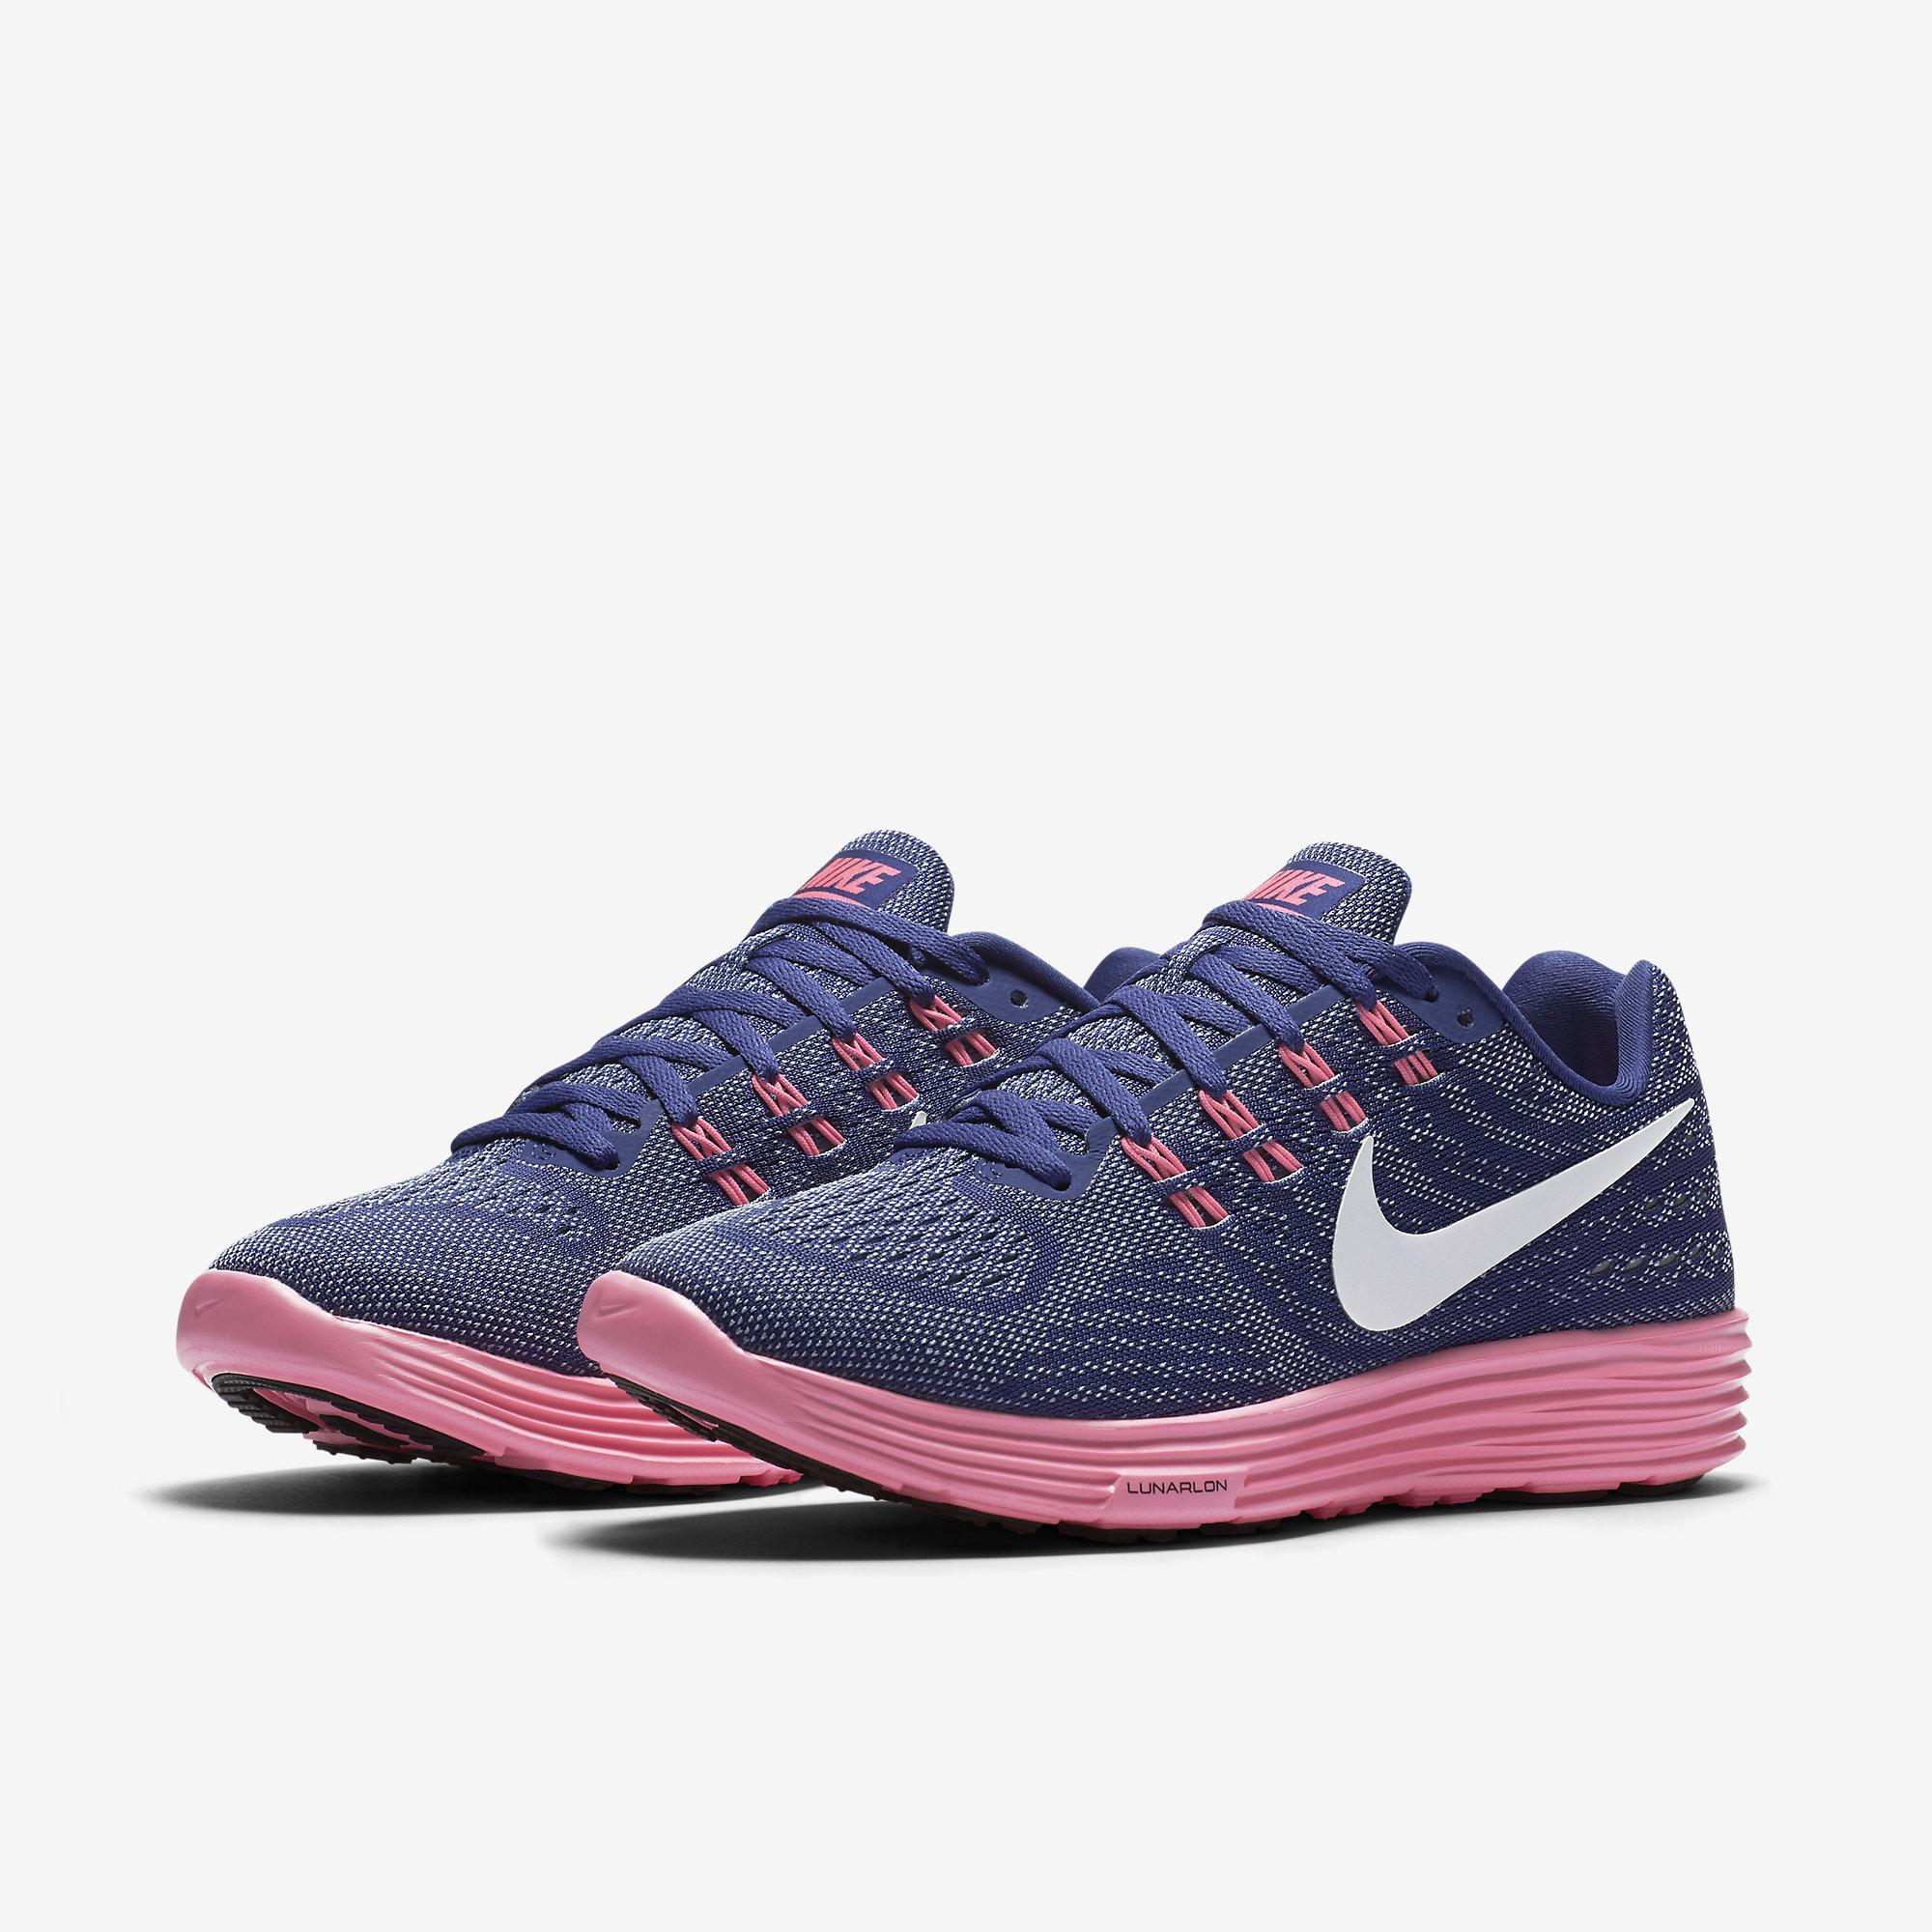 Nike Womens LunarTempo 2 Running Shoes - Purple ...